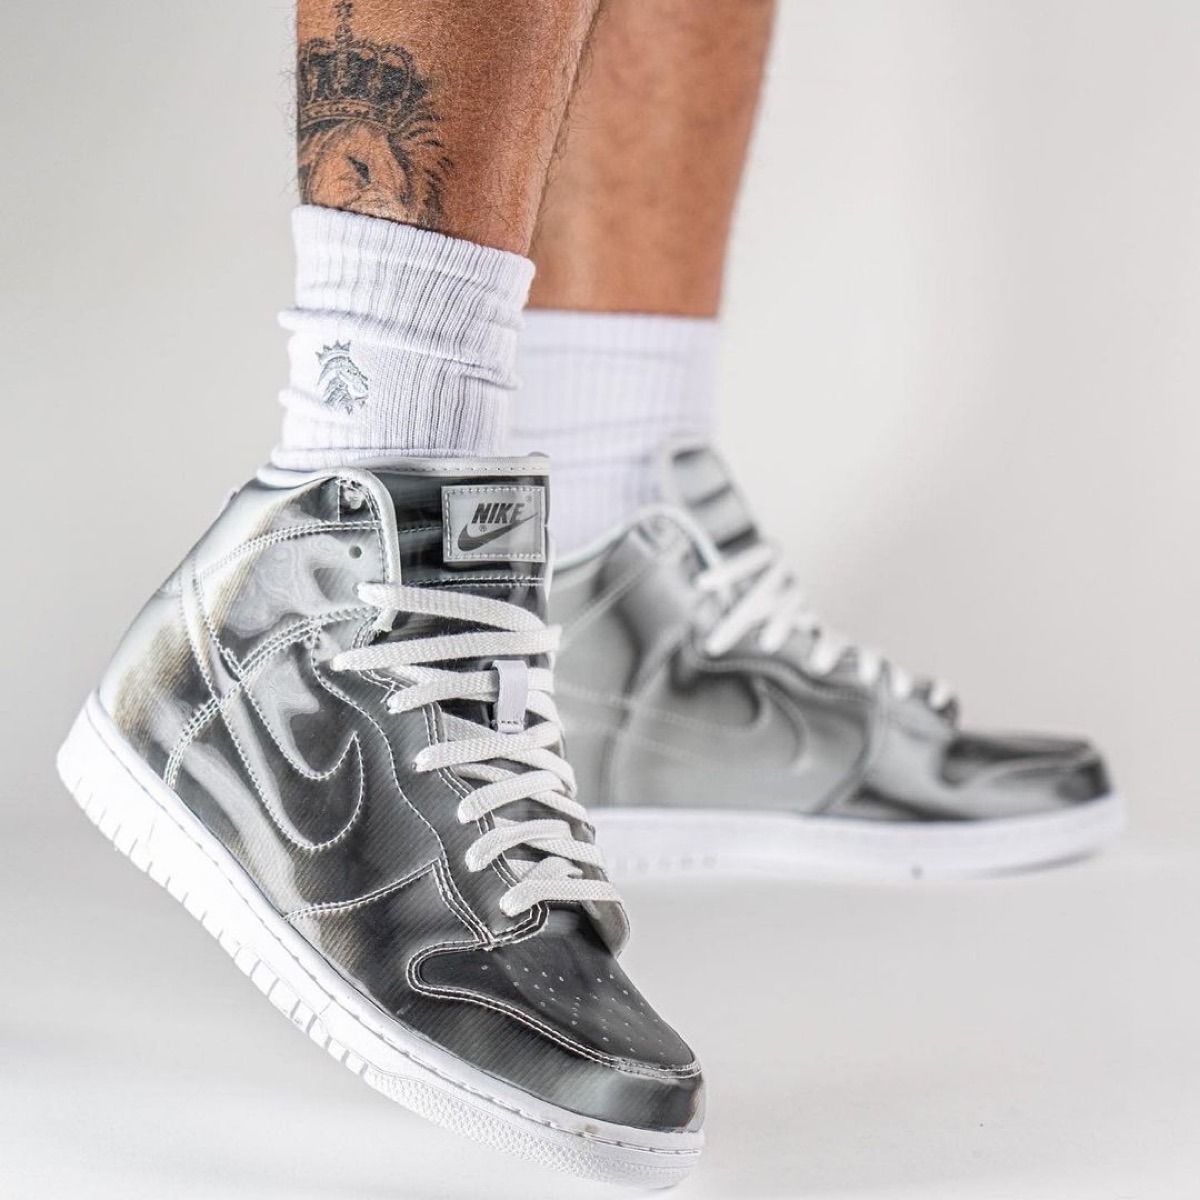 Metallic clot x Nike Dunk High “silver metallic” dunk collection插图4